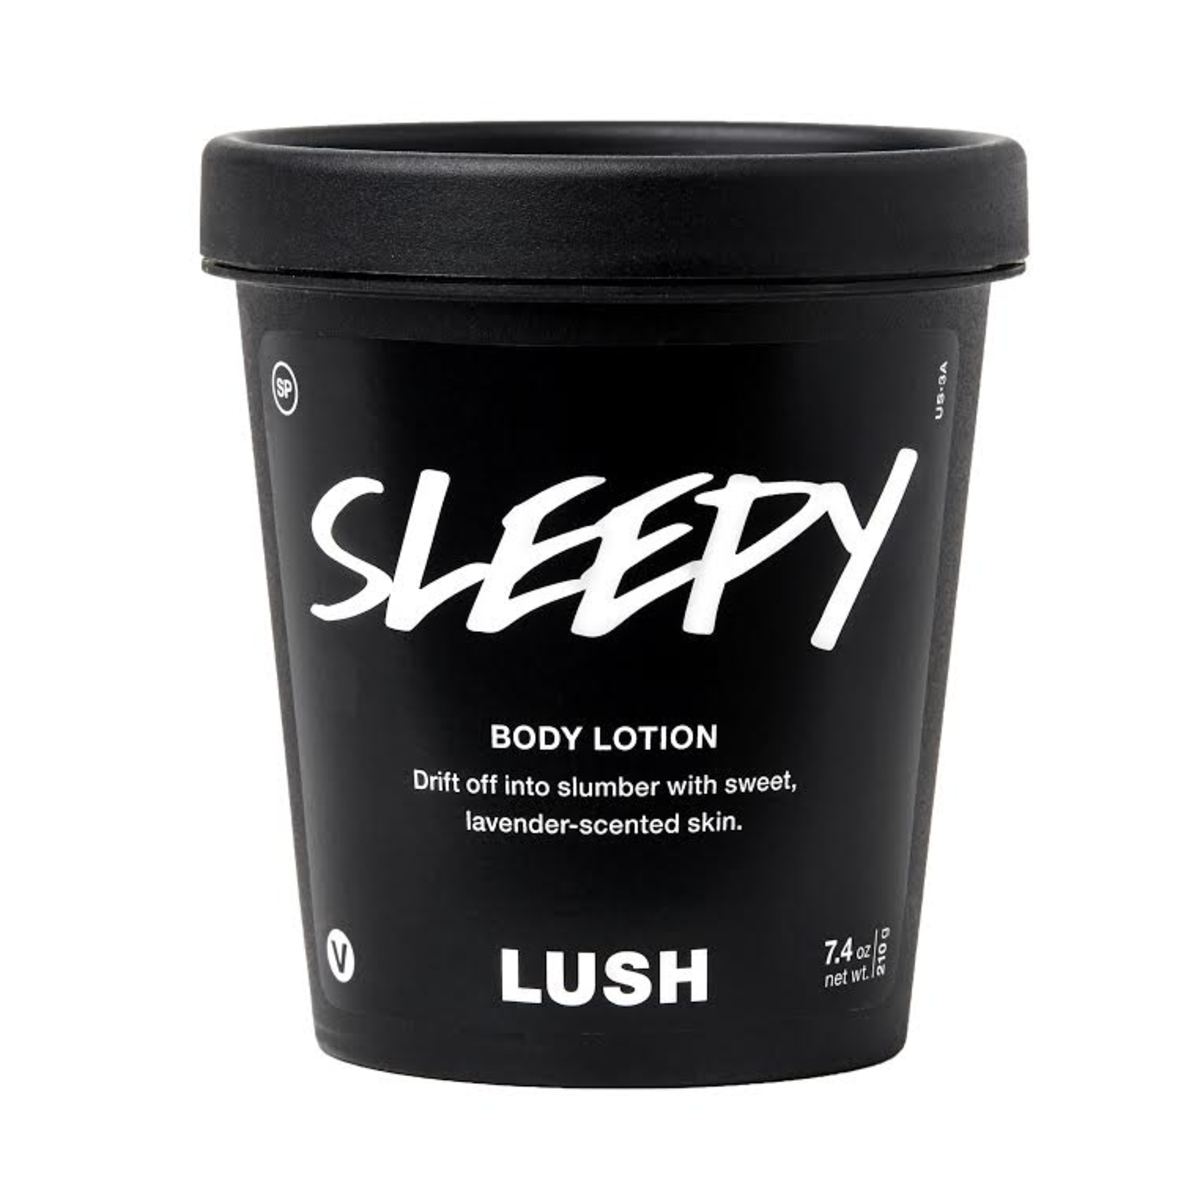 Lush Sleepy Body Lotion, $9.95, available at Lush.